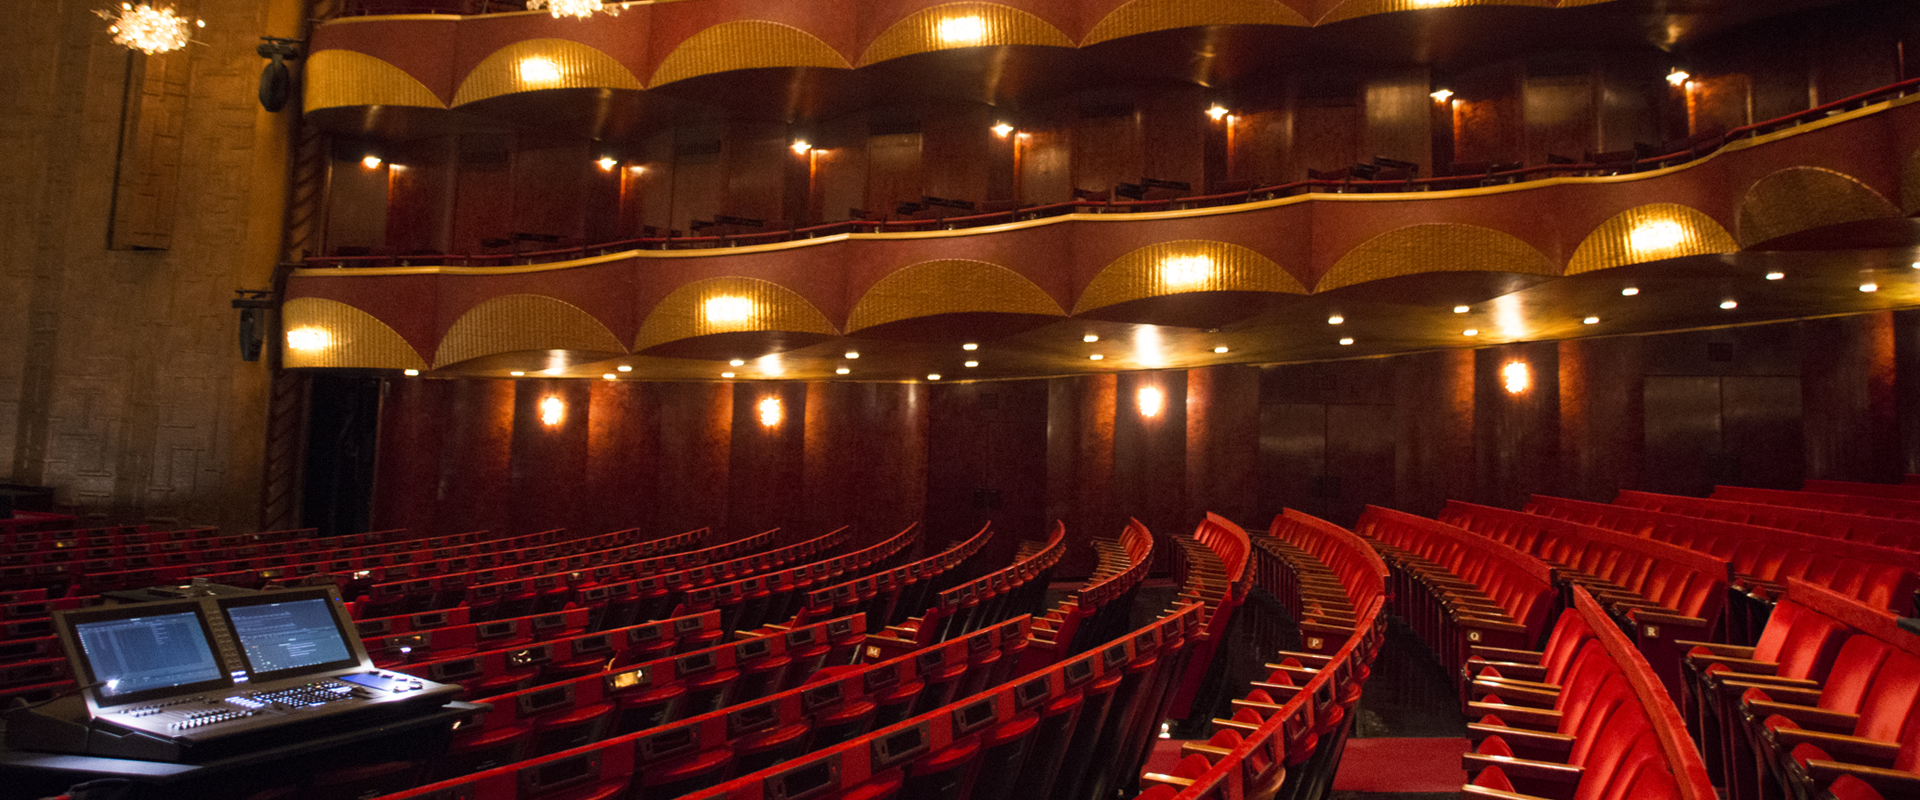 Metropolitan Opera, New York, NY